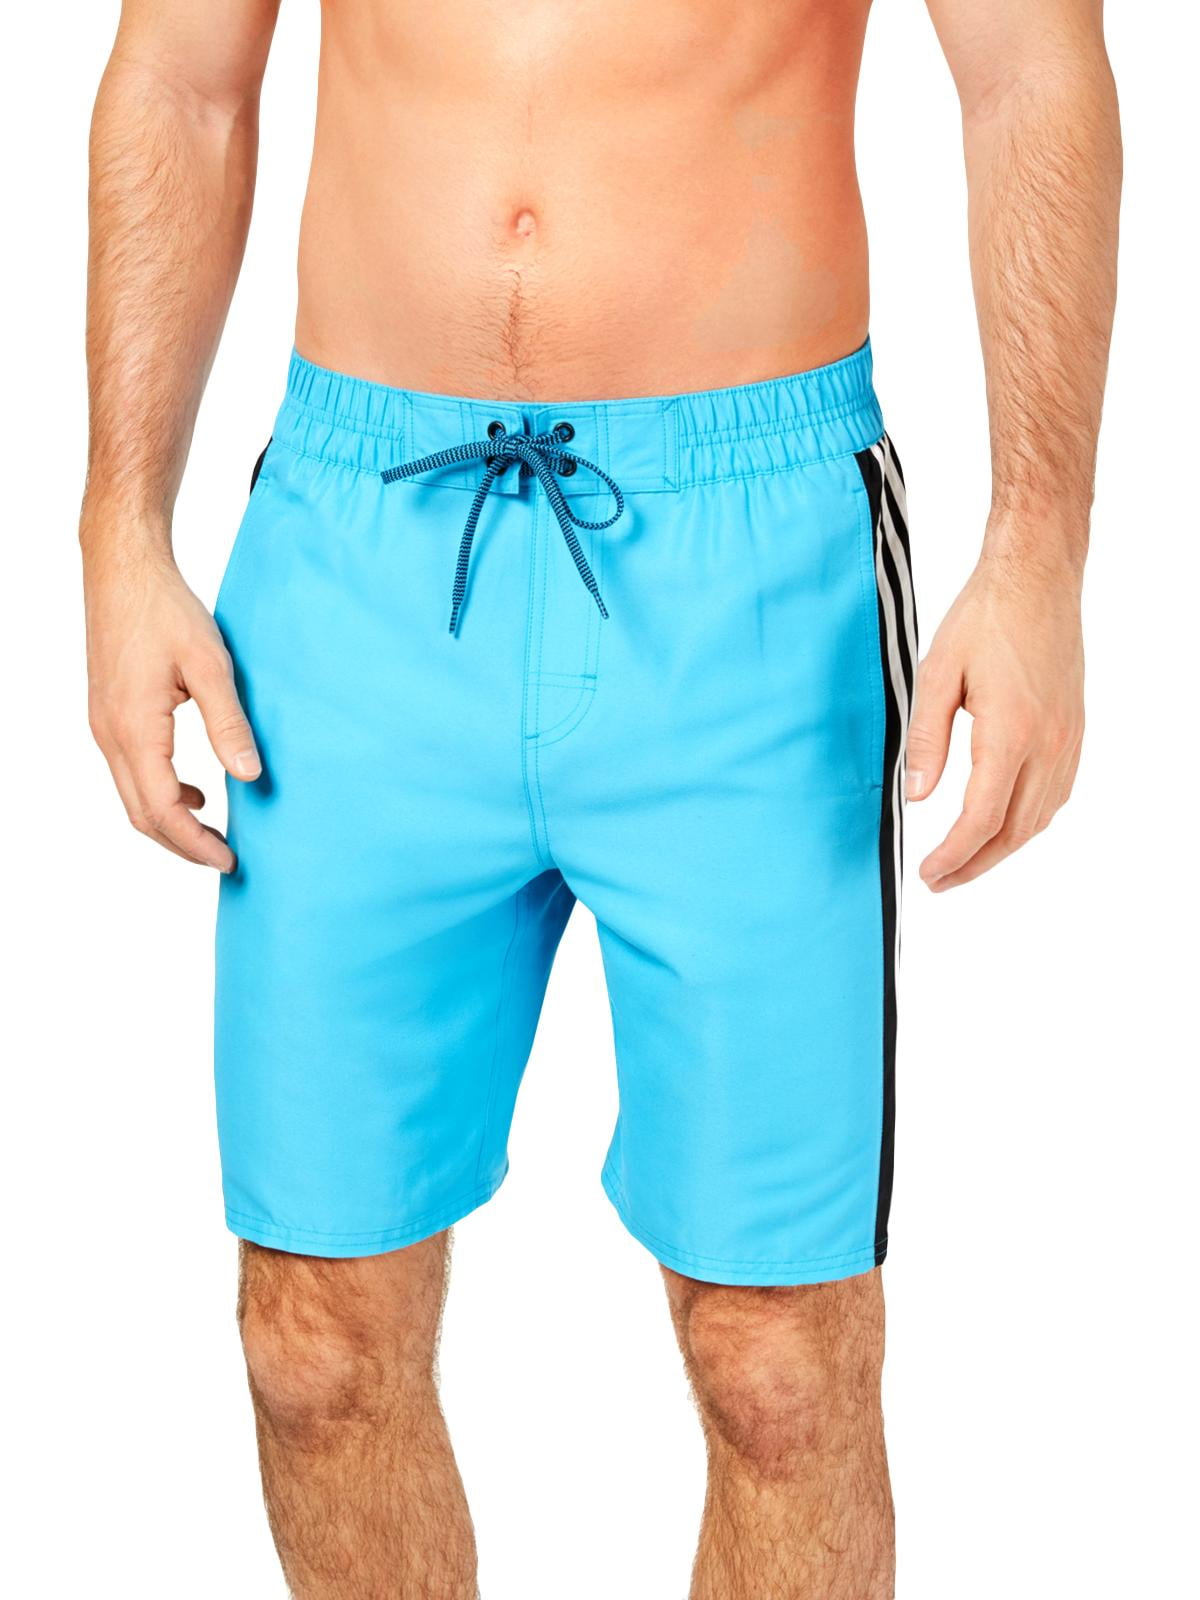 Adidas - Adidas Mens Beach Wear Summer Swim Trunks - Walmart.com ...